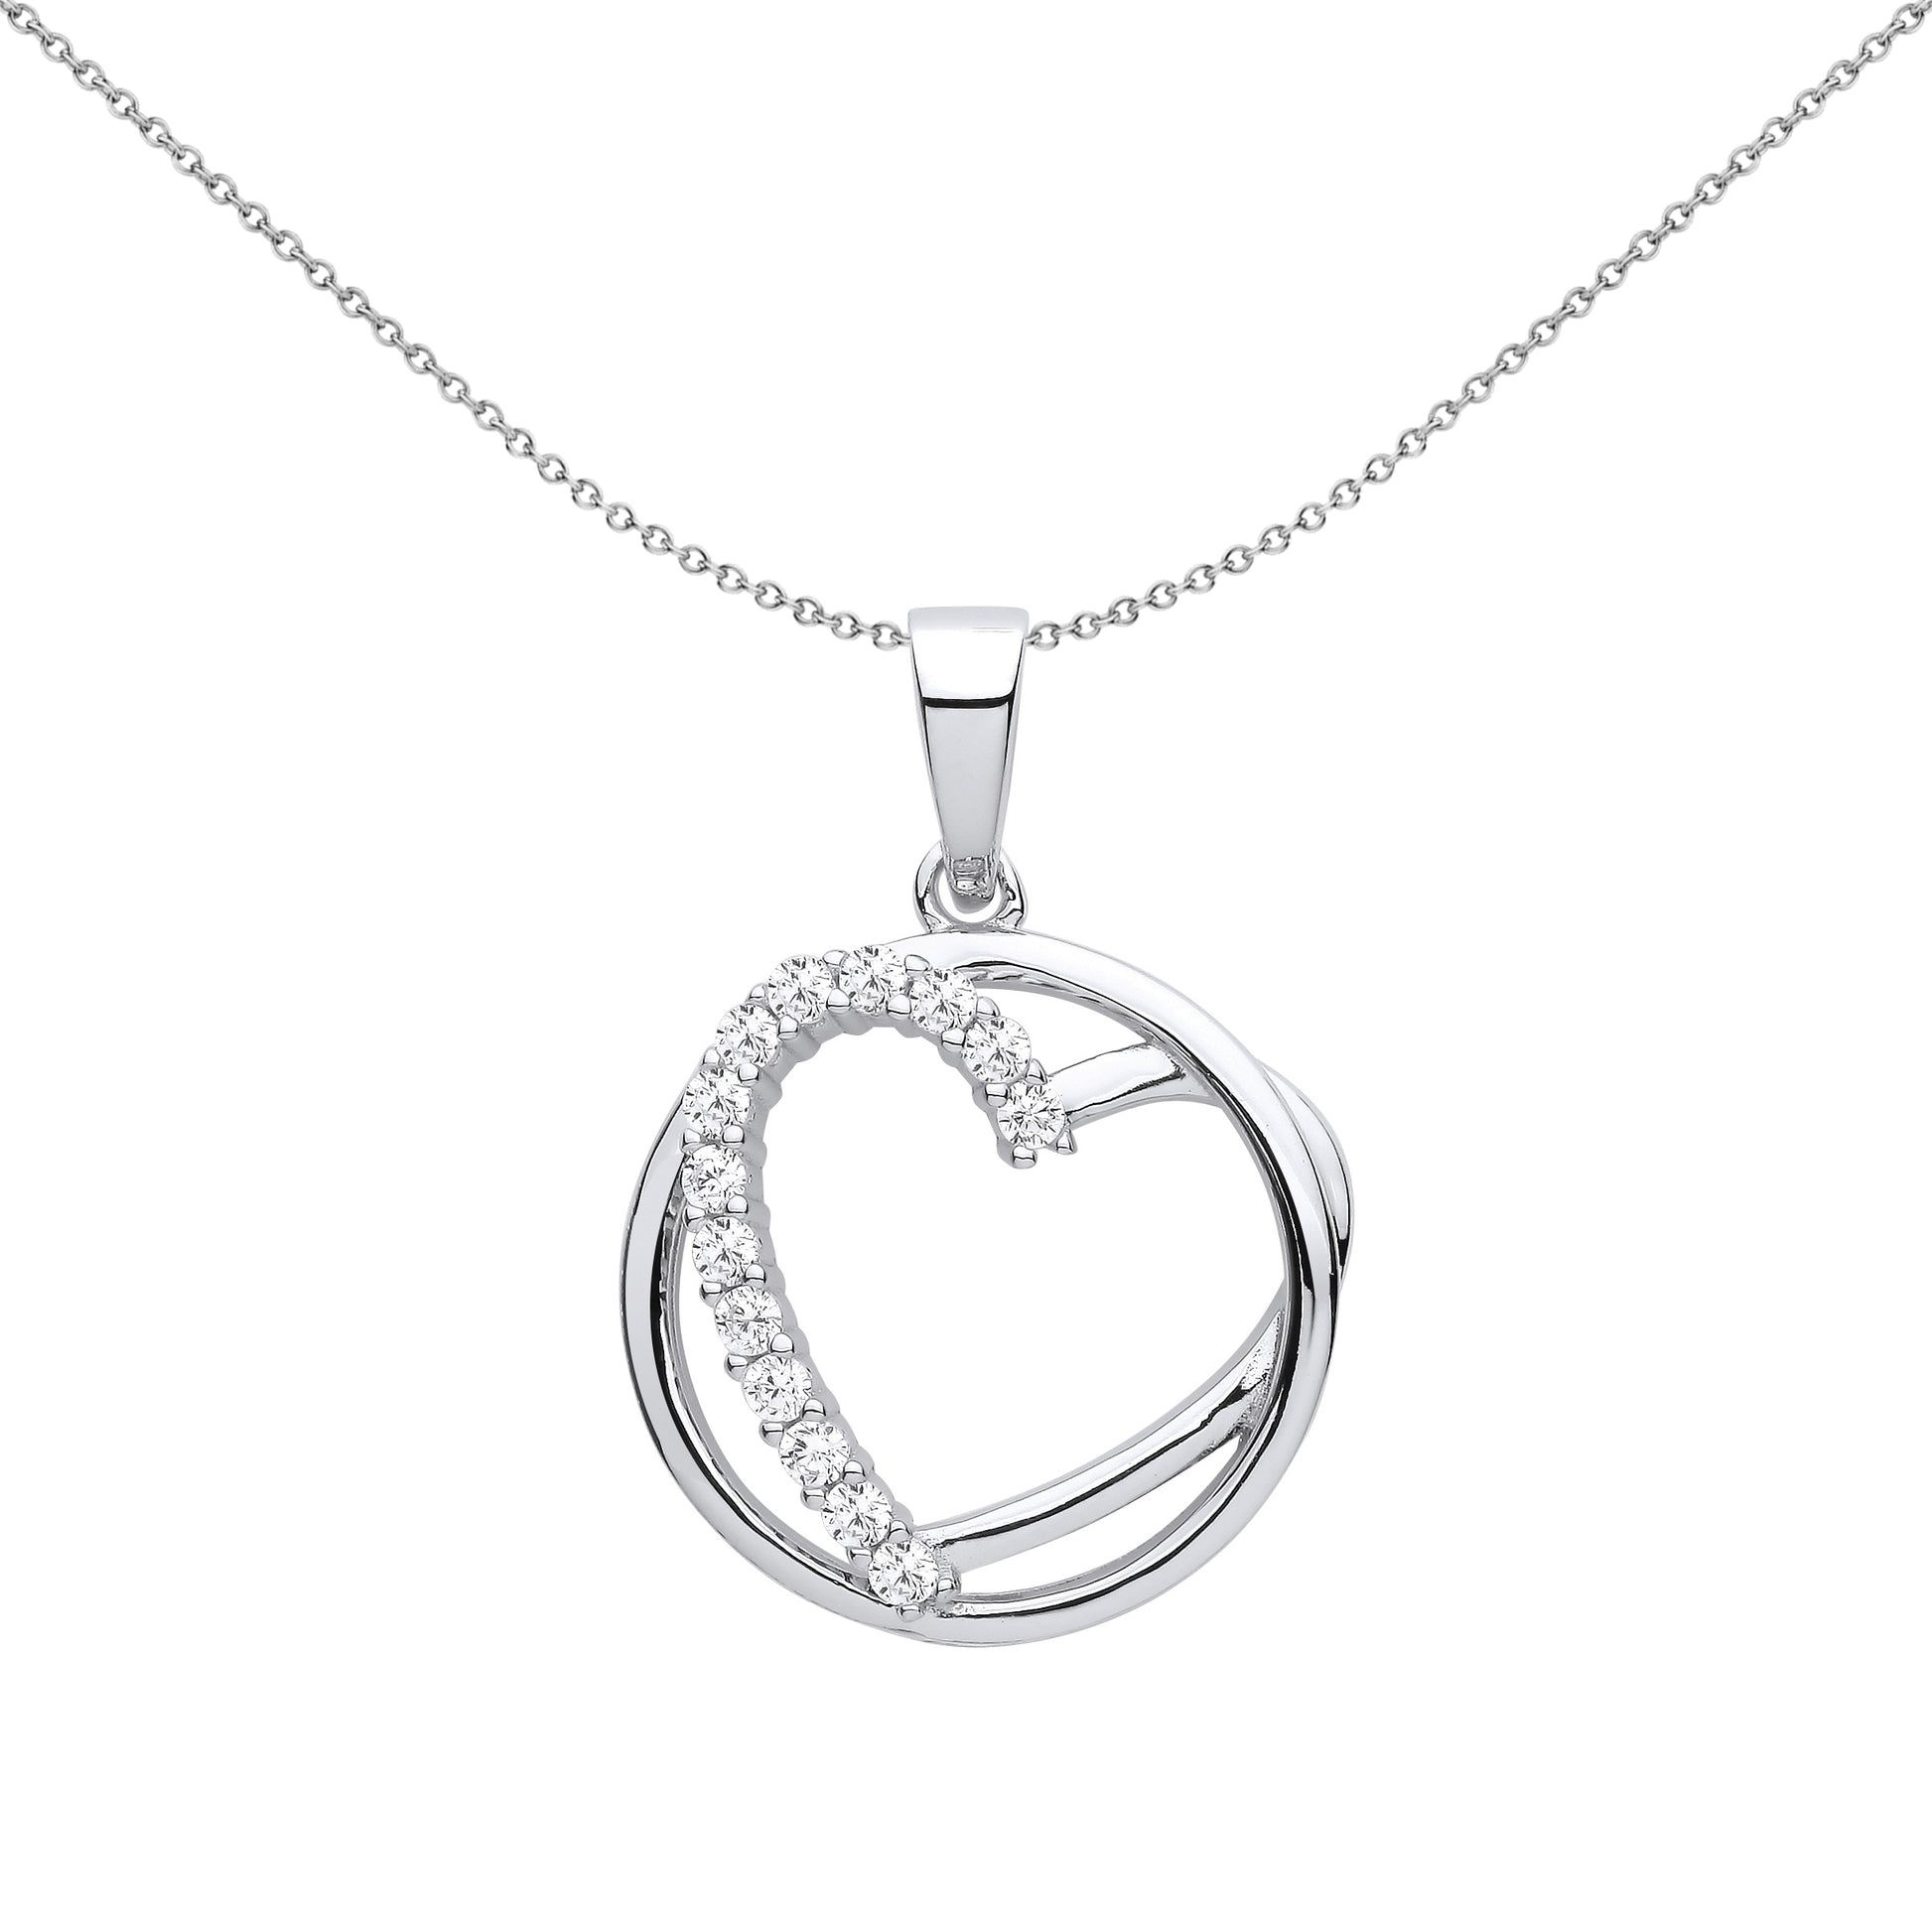 Silver  Circle of Love Heart Pendant Necklace - GVP613